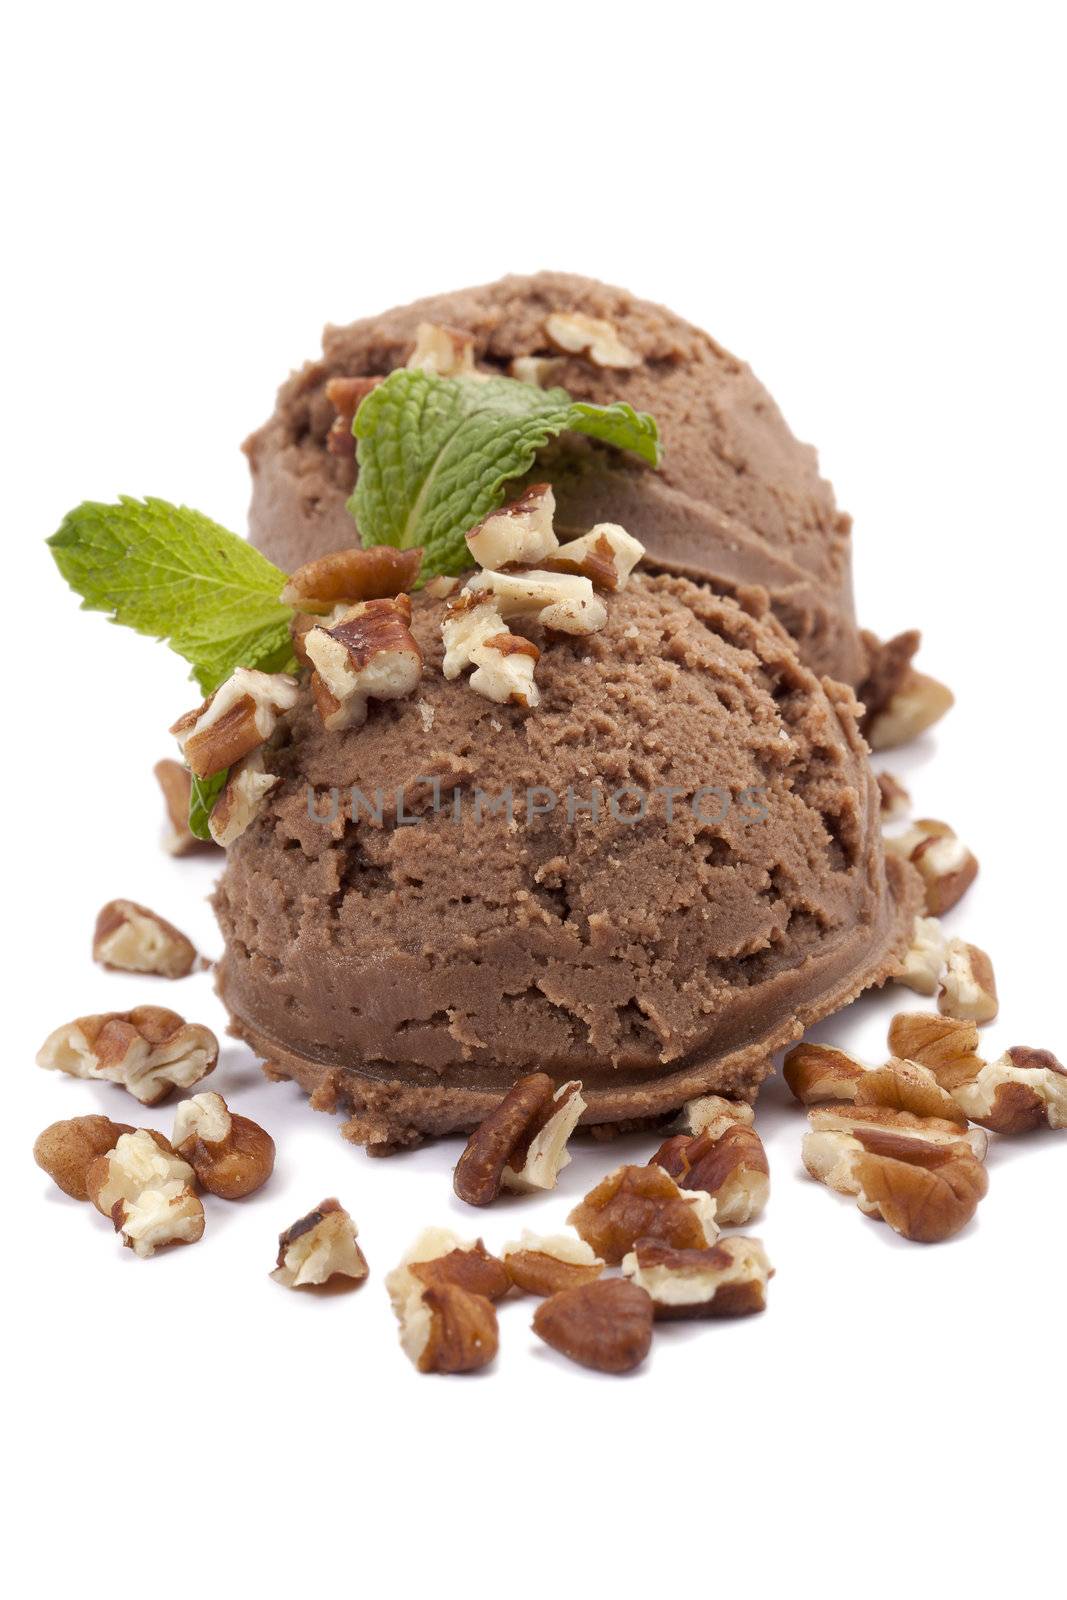 chocolate almond premium ice cream with mint leaf by kozzi